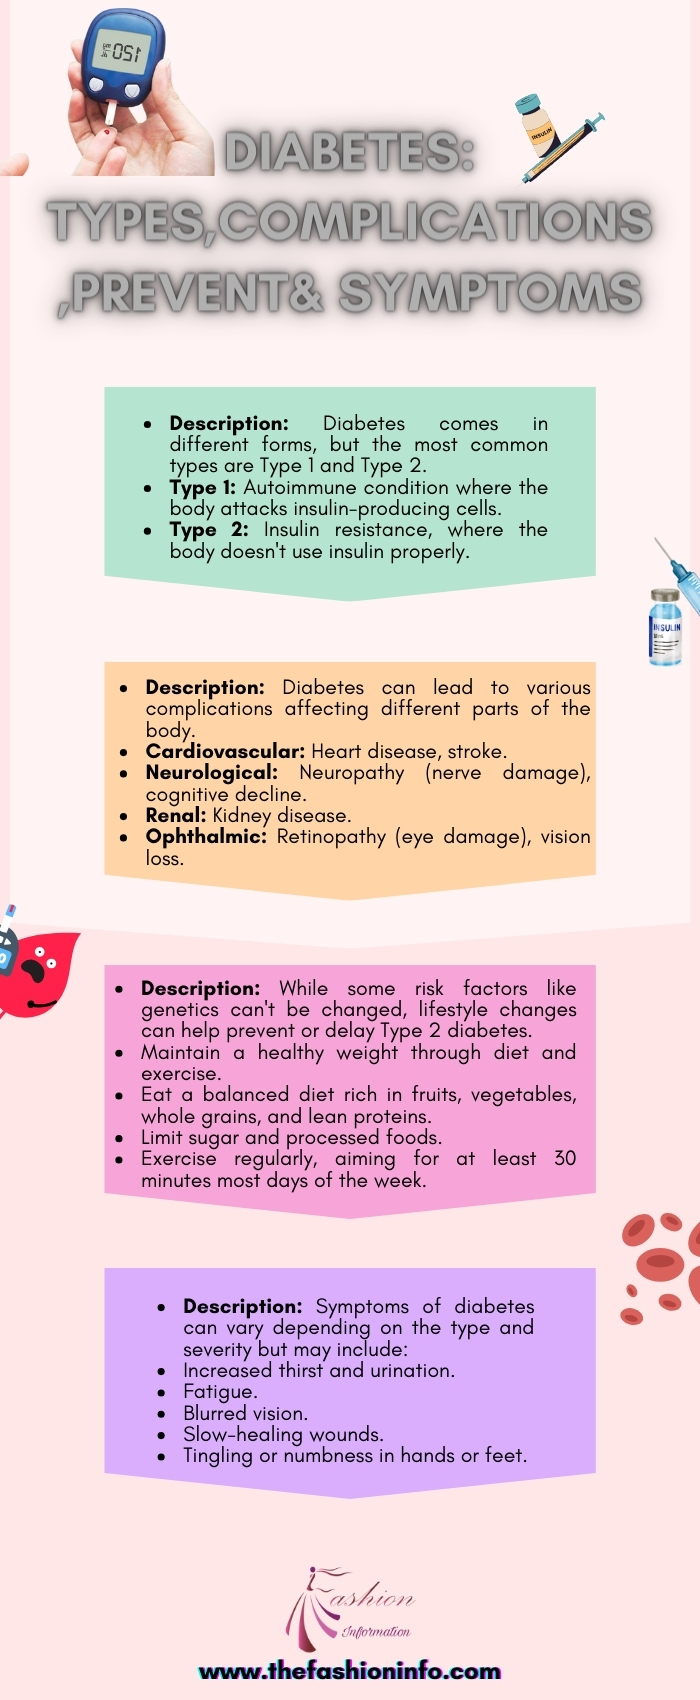 Diabetes Types,Complications,Prevent& Symptoms